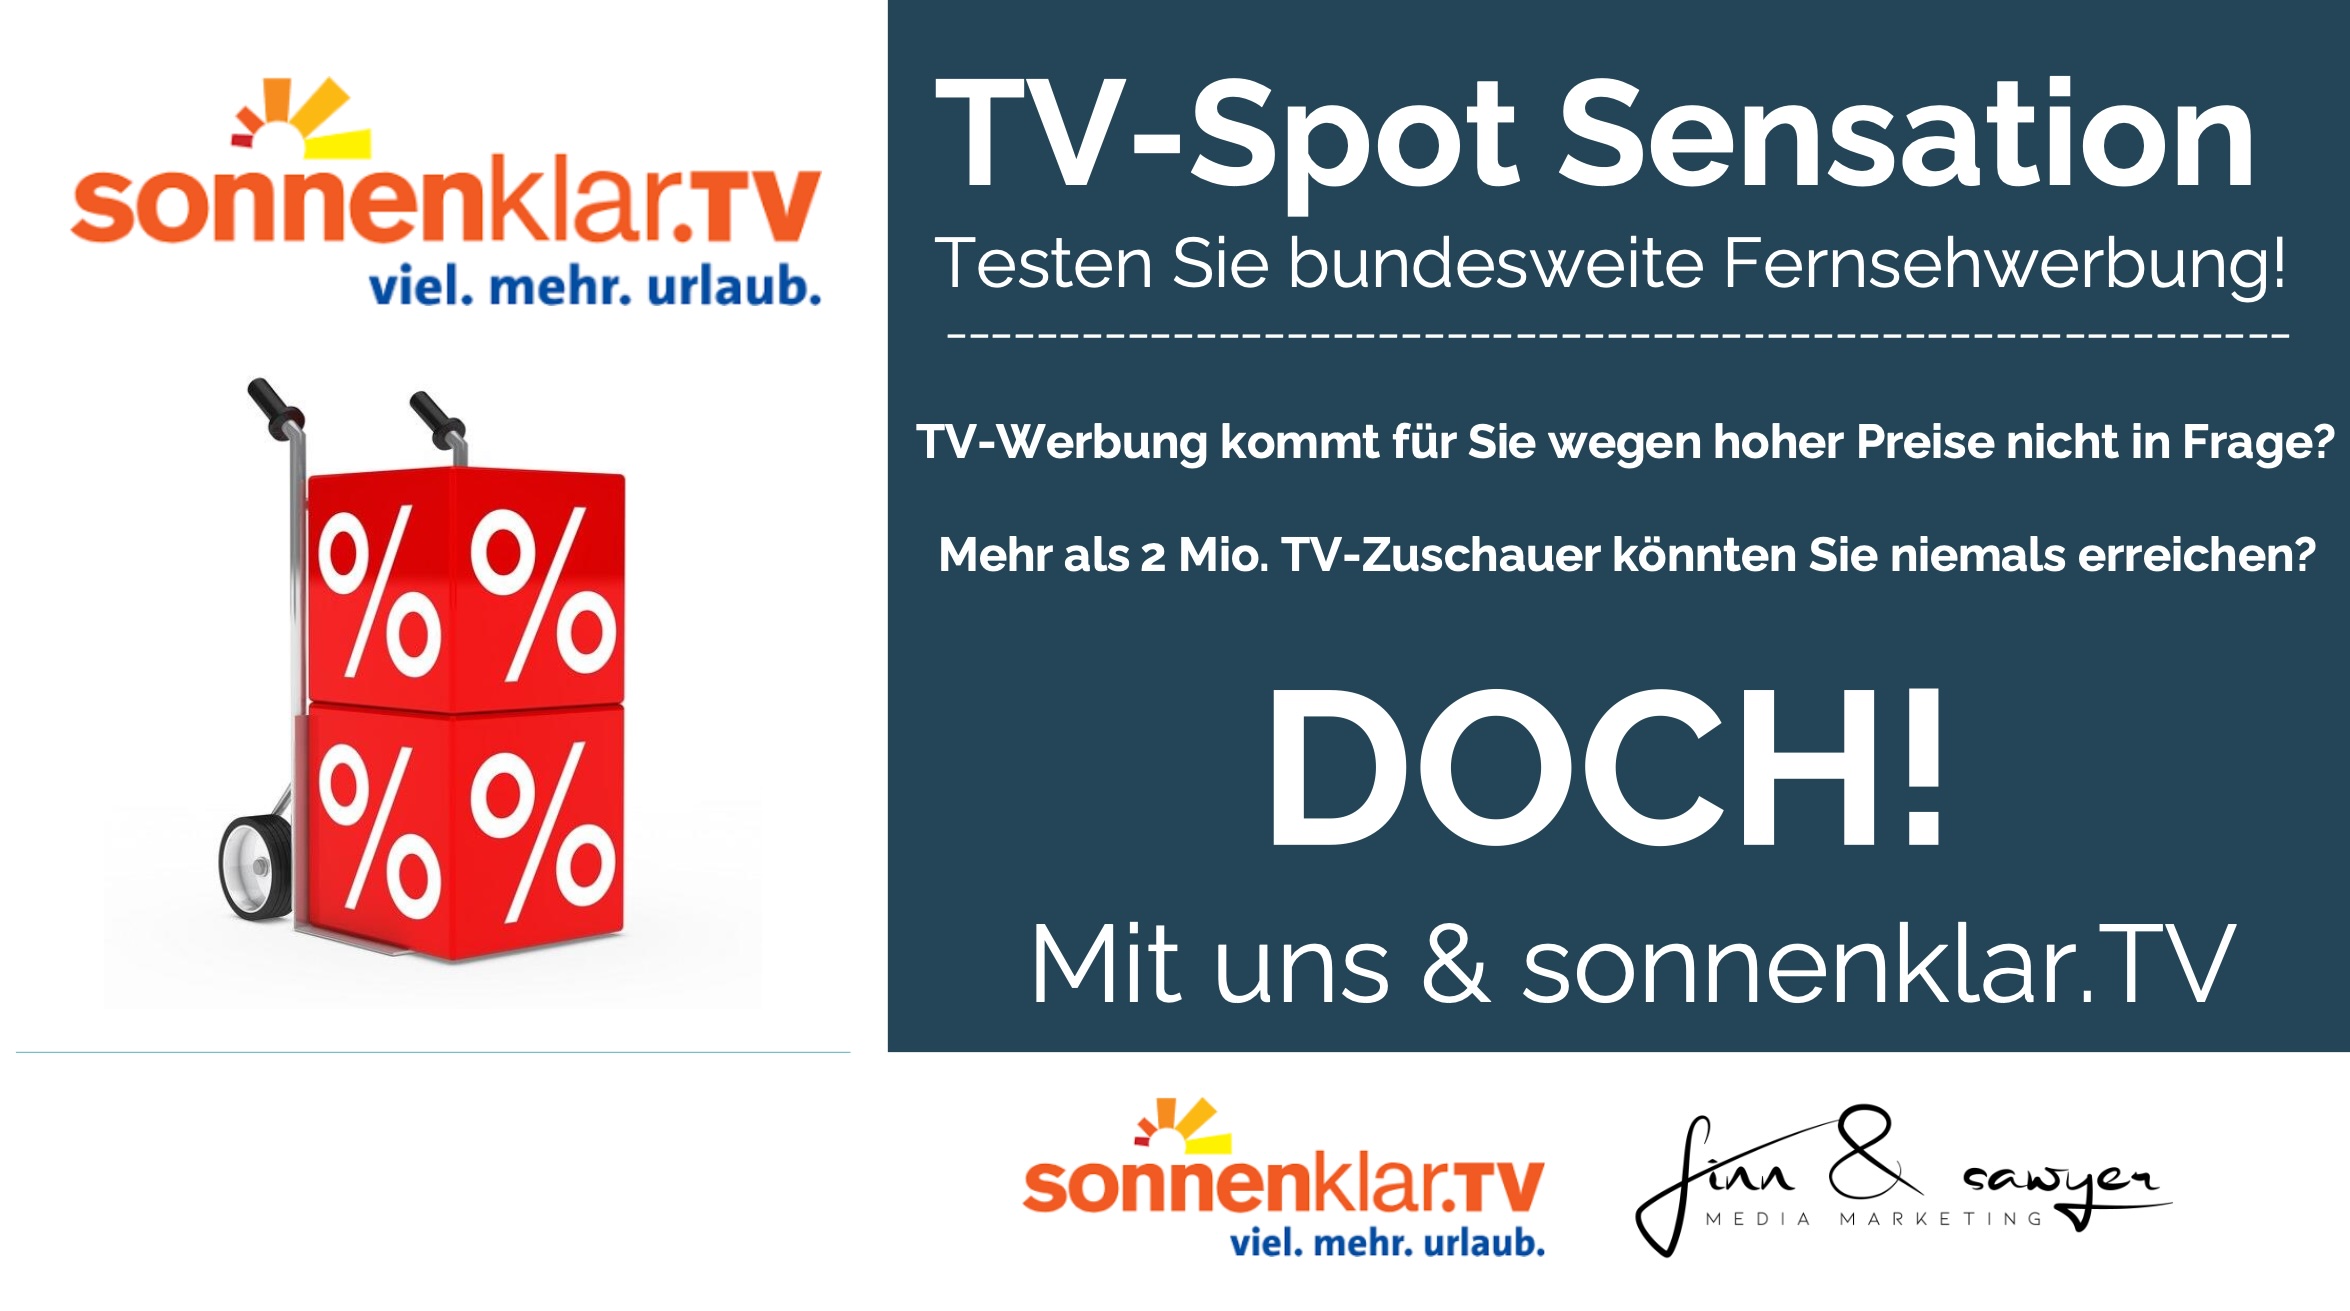 Die TV-Spot Sensation